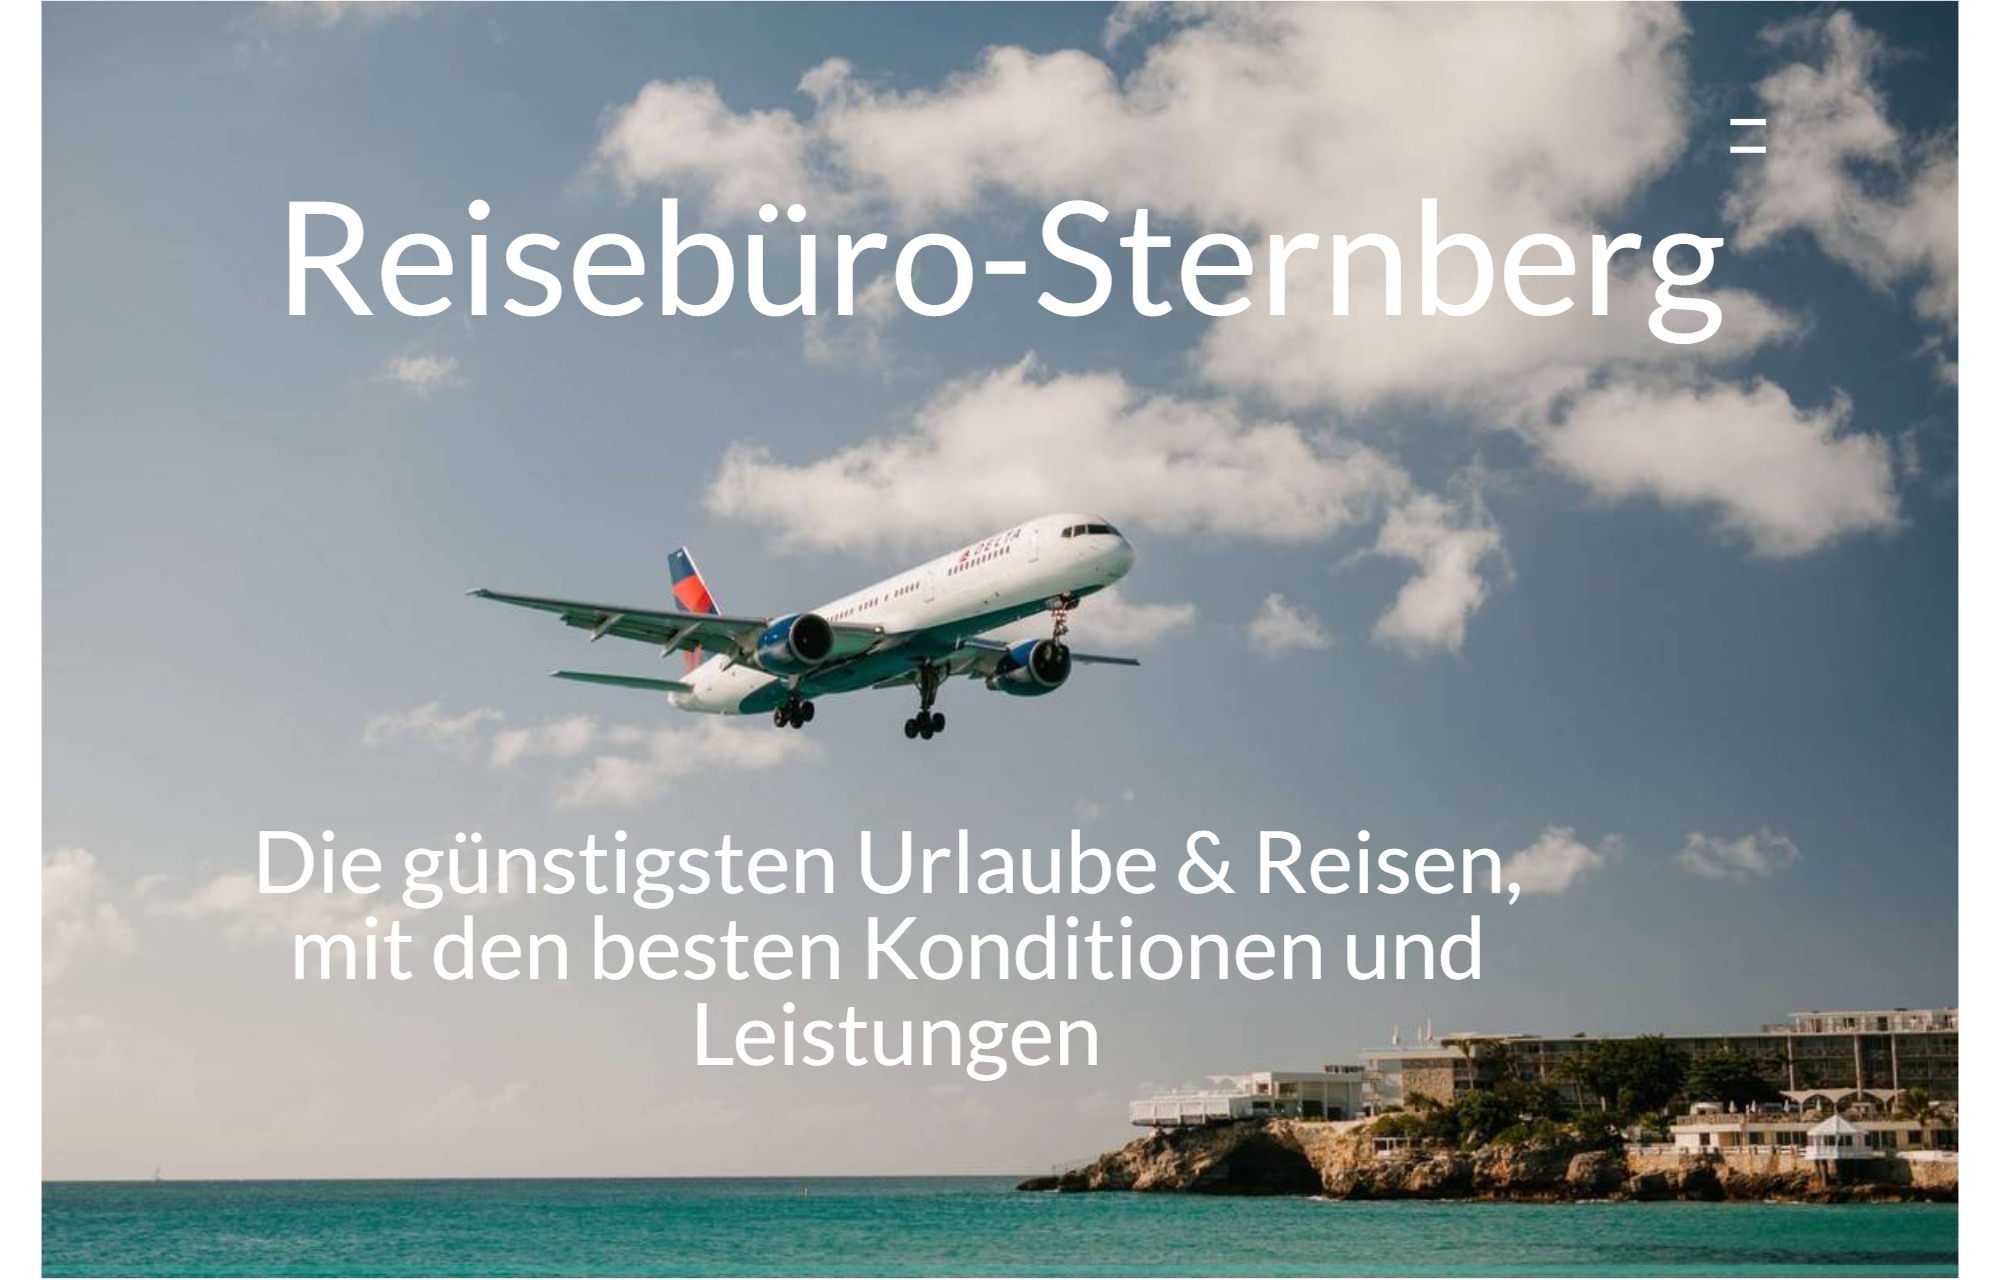 Reisebüro-Sternberg